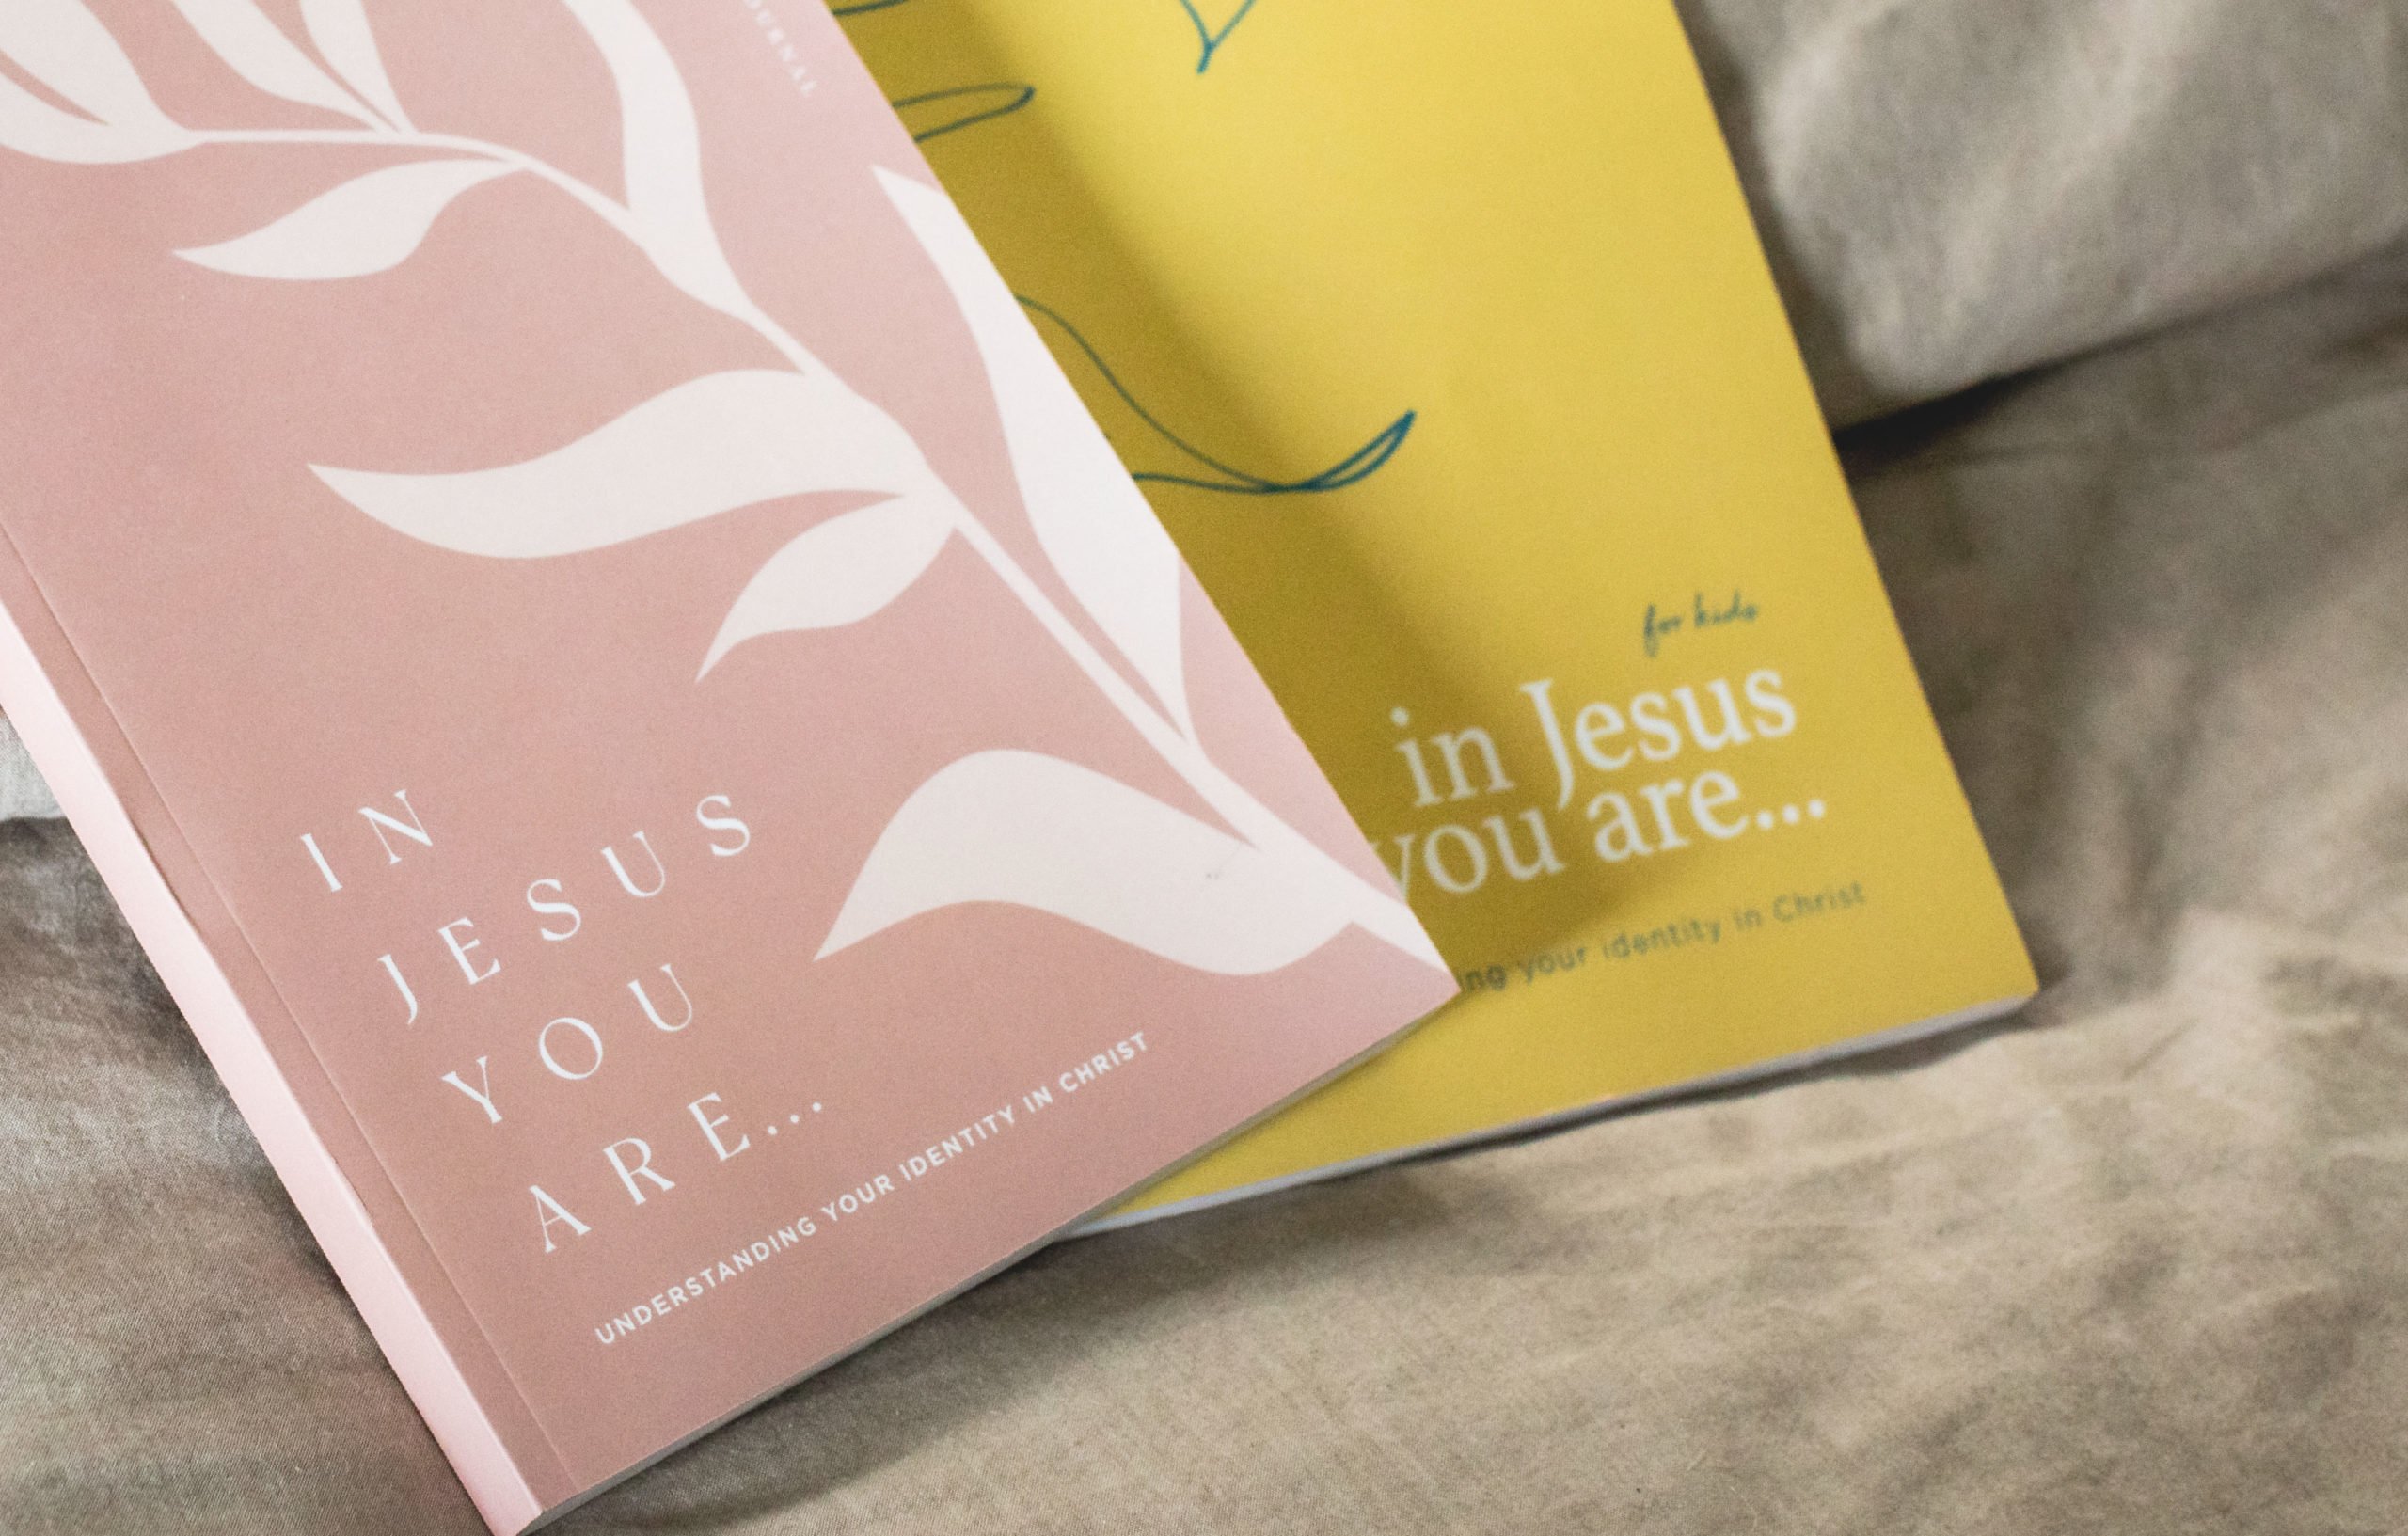 Friendship Bible Study Journal for Women